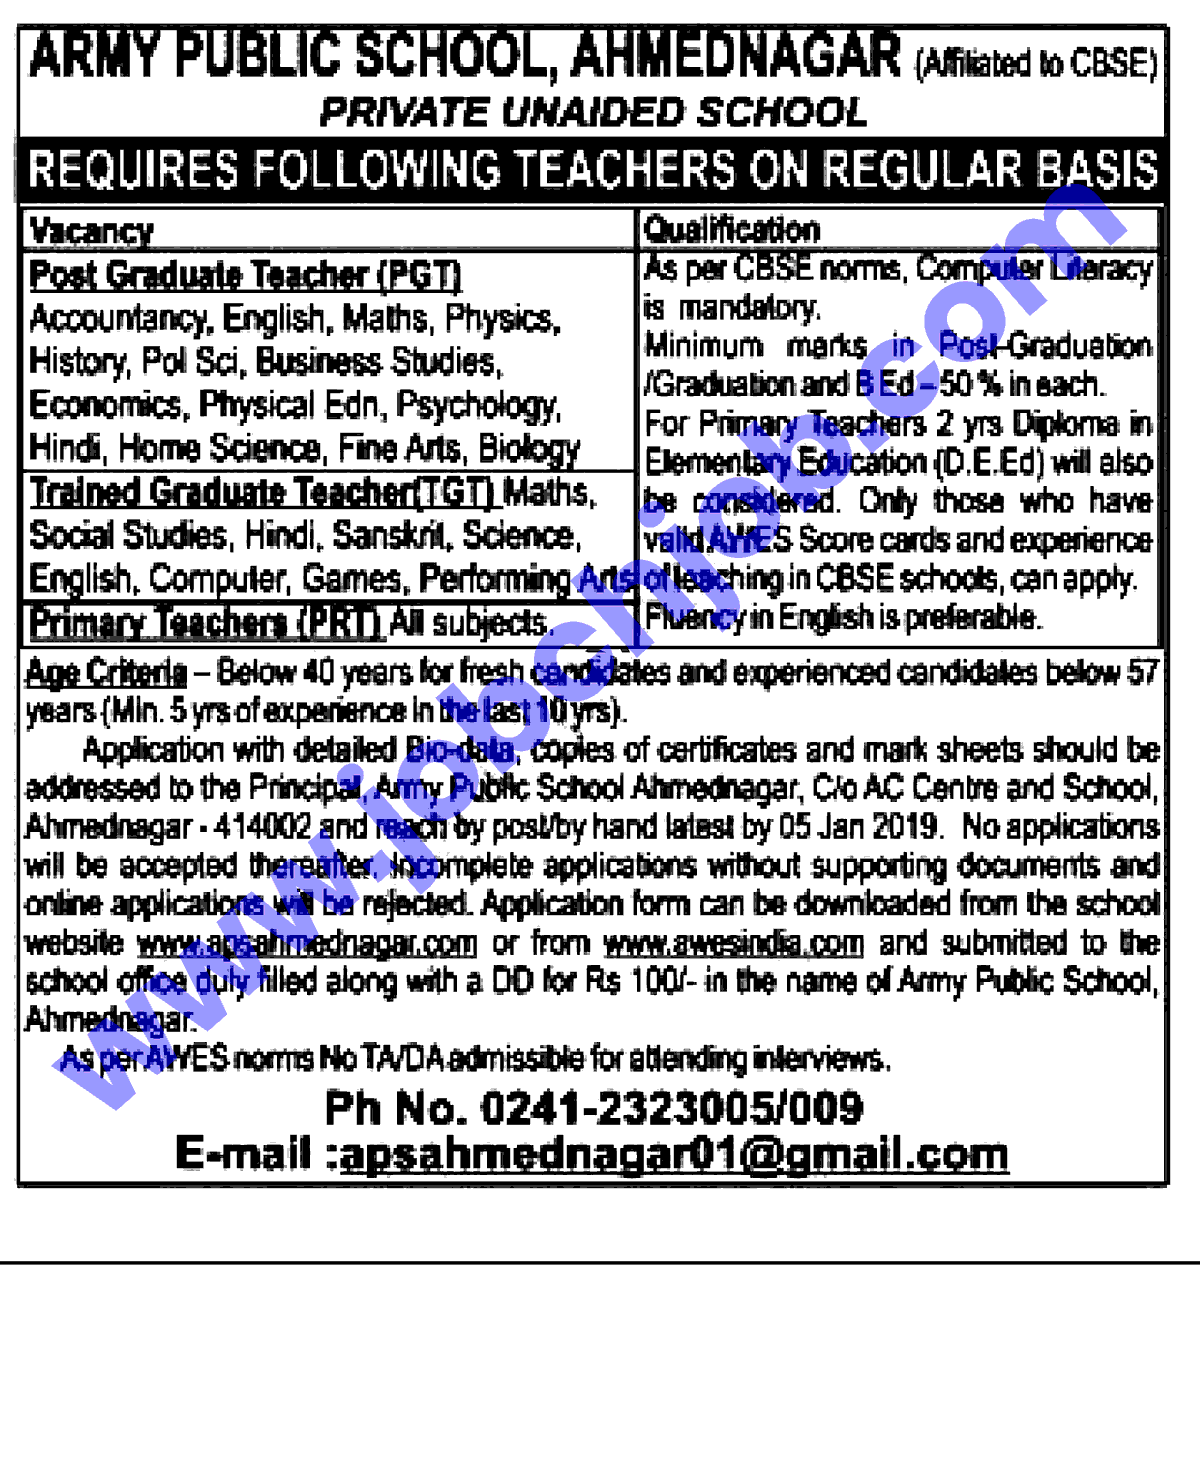 Ahmednagar Army Public School Recruitment 2019 Teacher